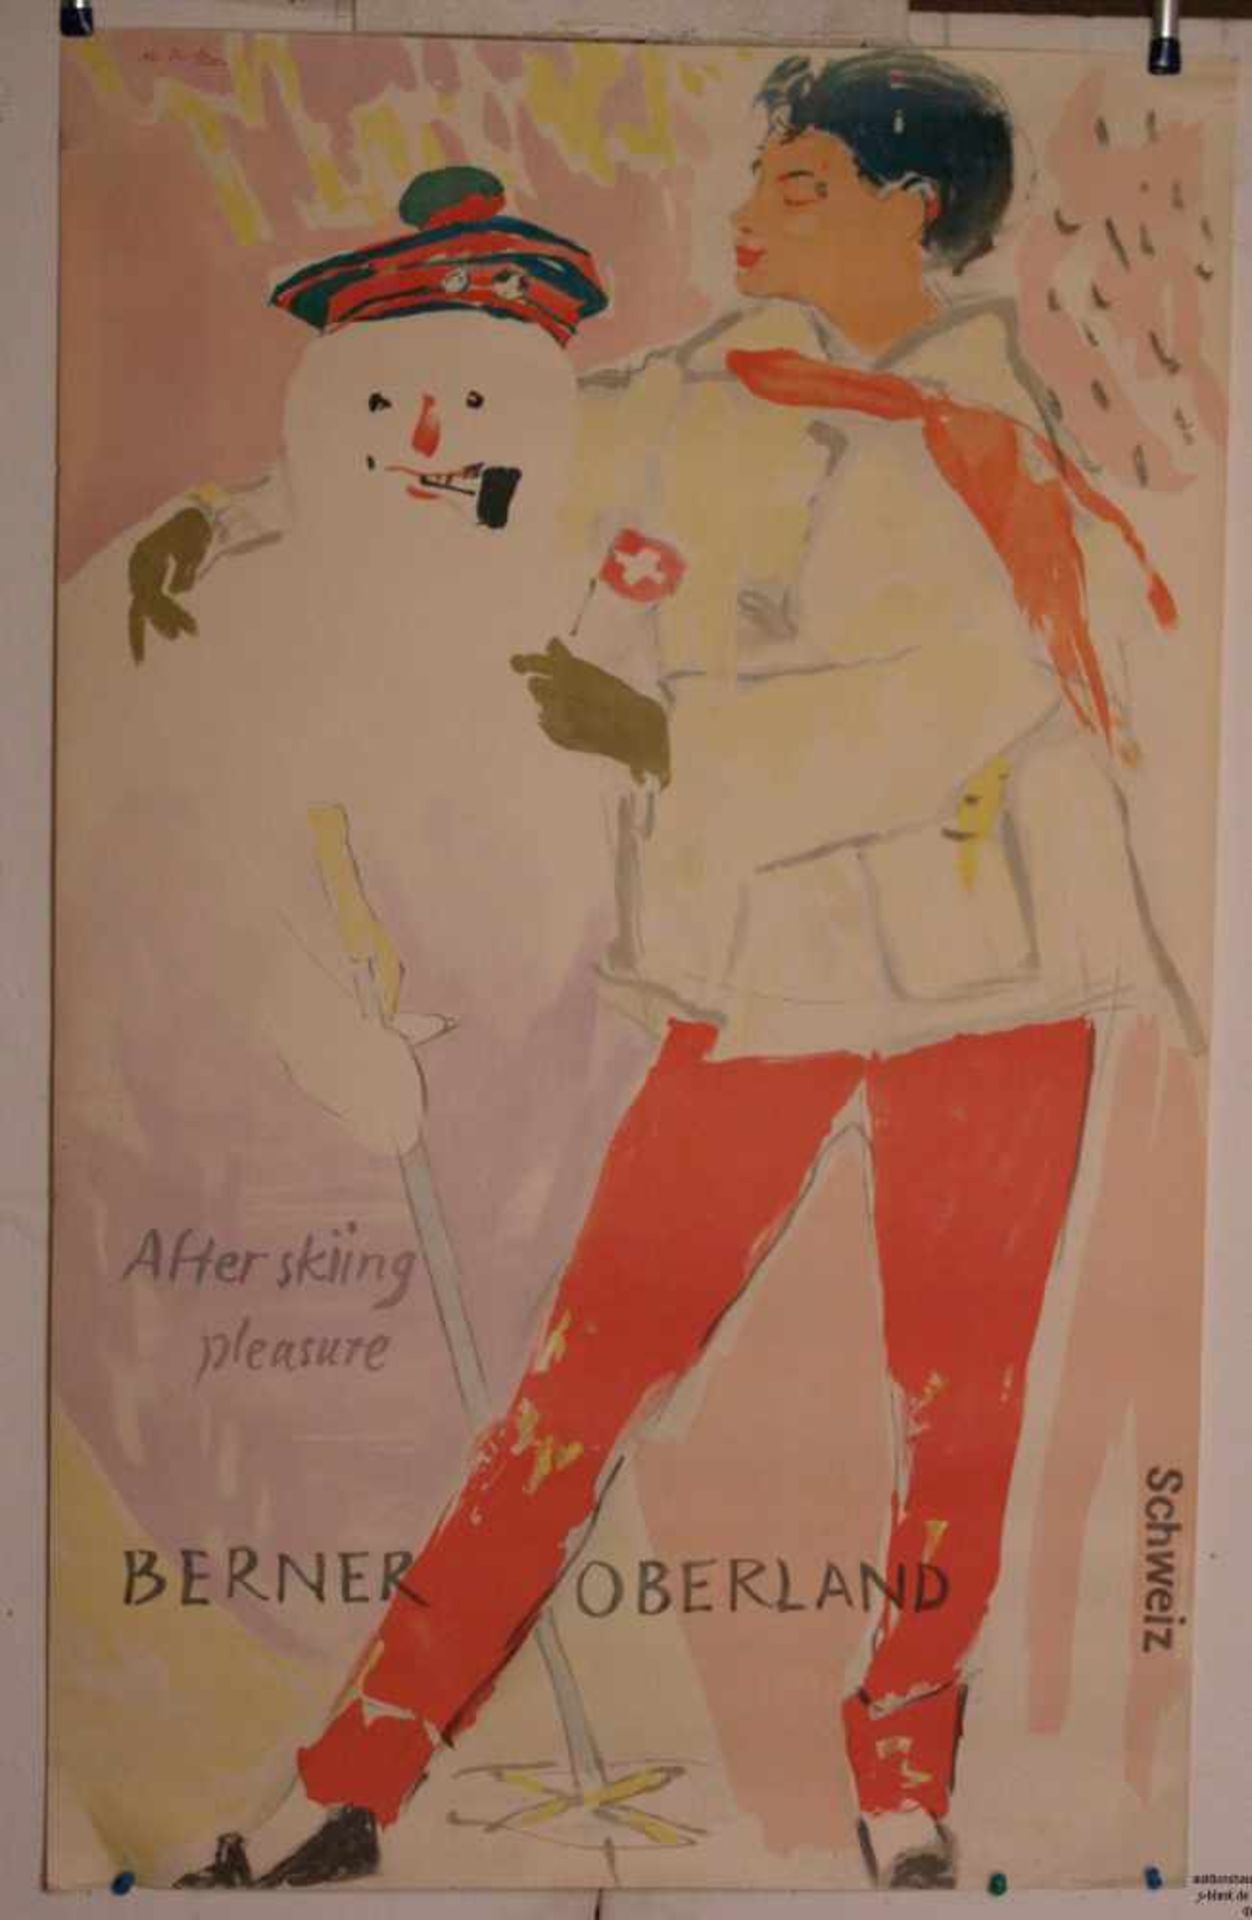 Falk, Hans (1918 -Zürich- 2002) - Plakat "Berner Oberland. After skiing pleasure", 1949,